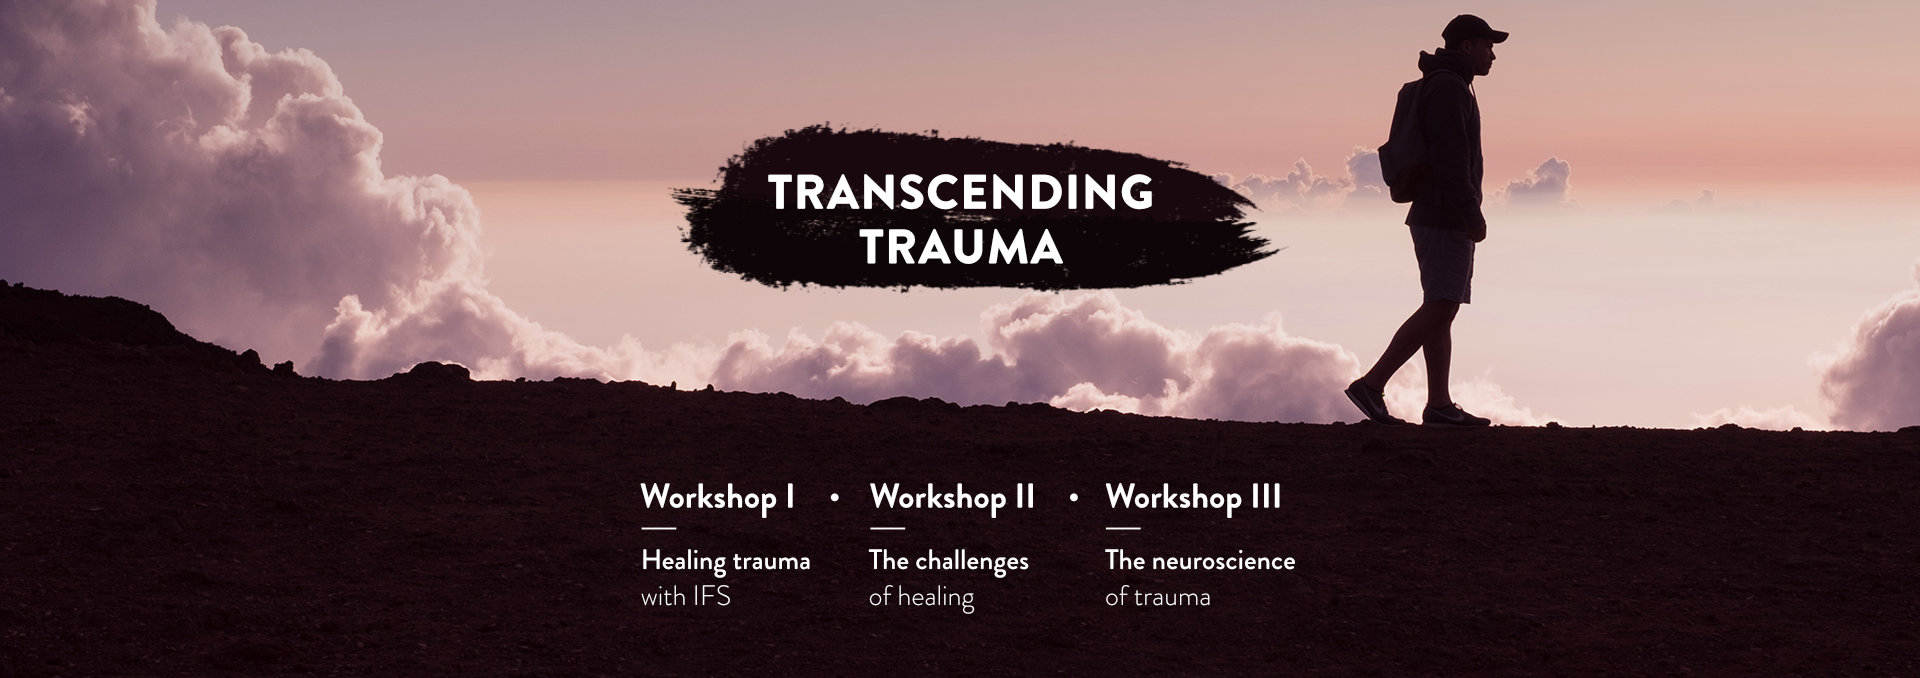 Transcending trauma LP 21